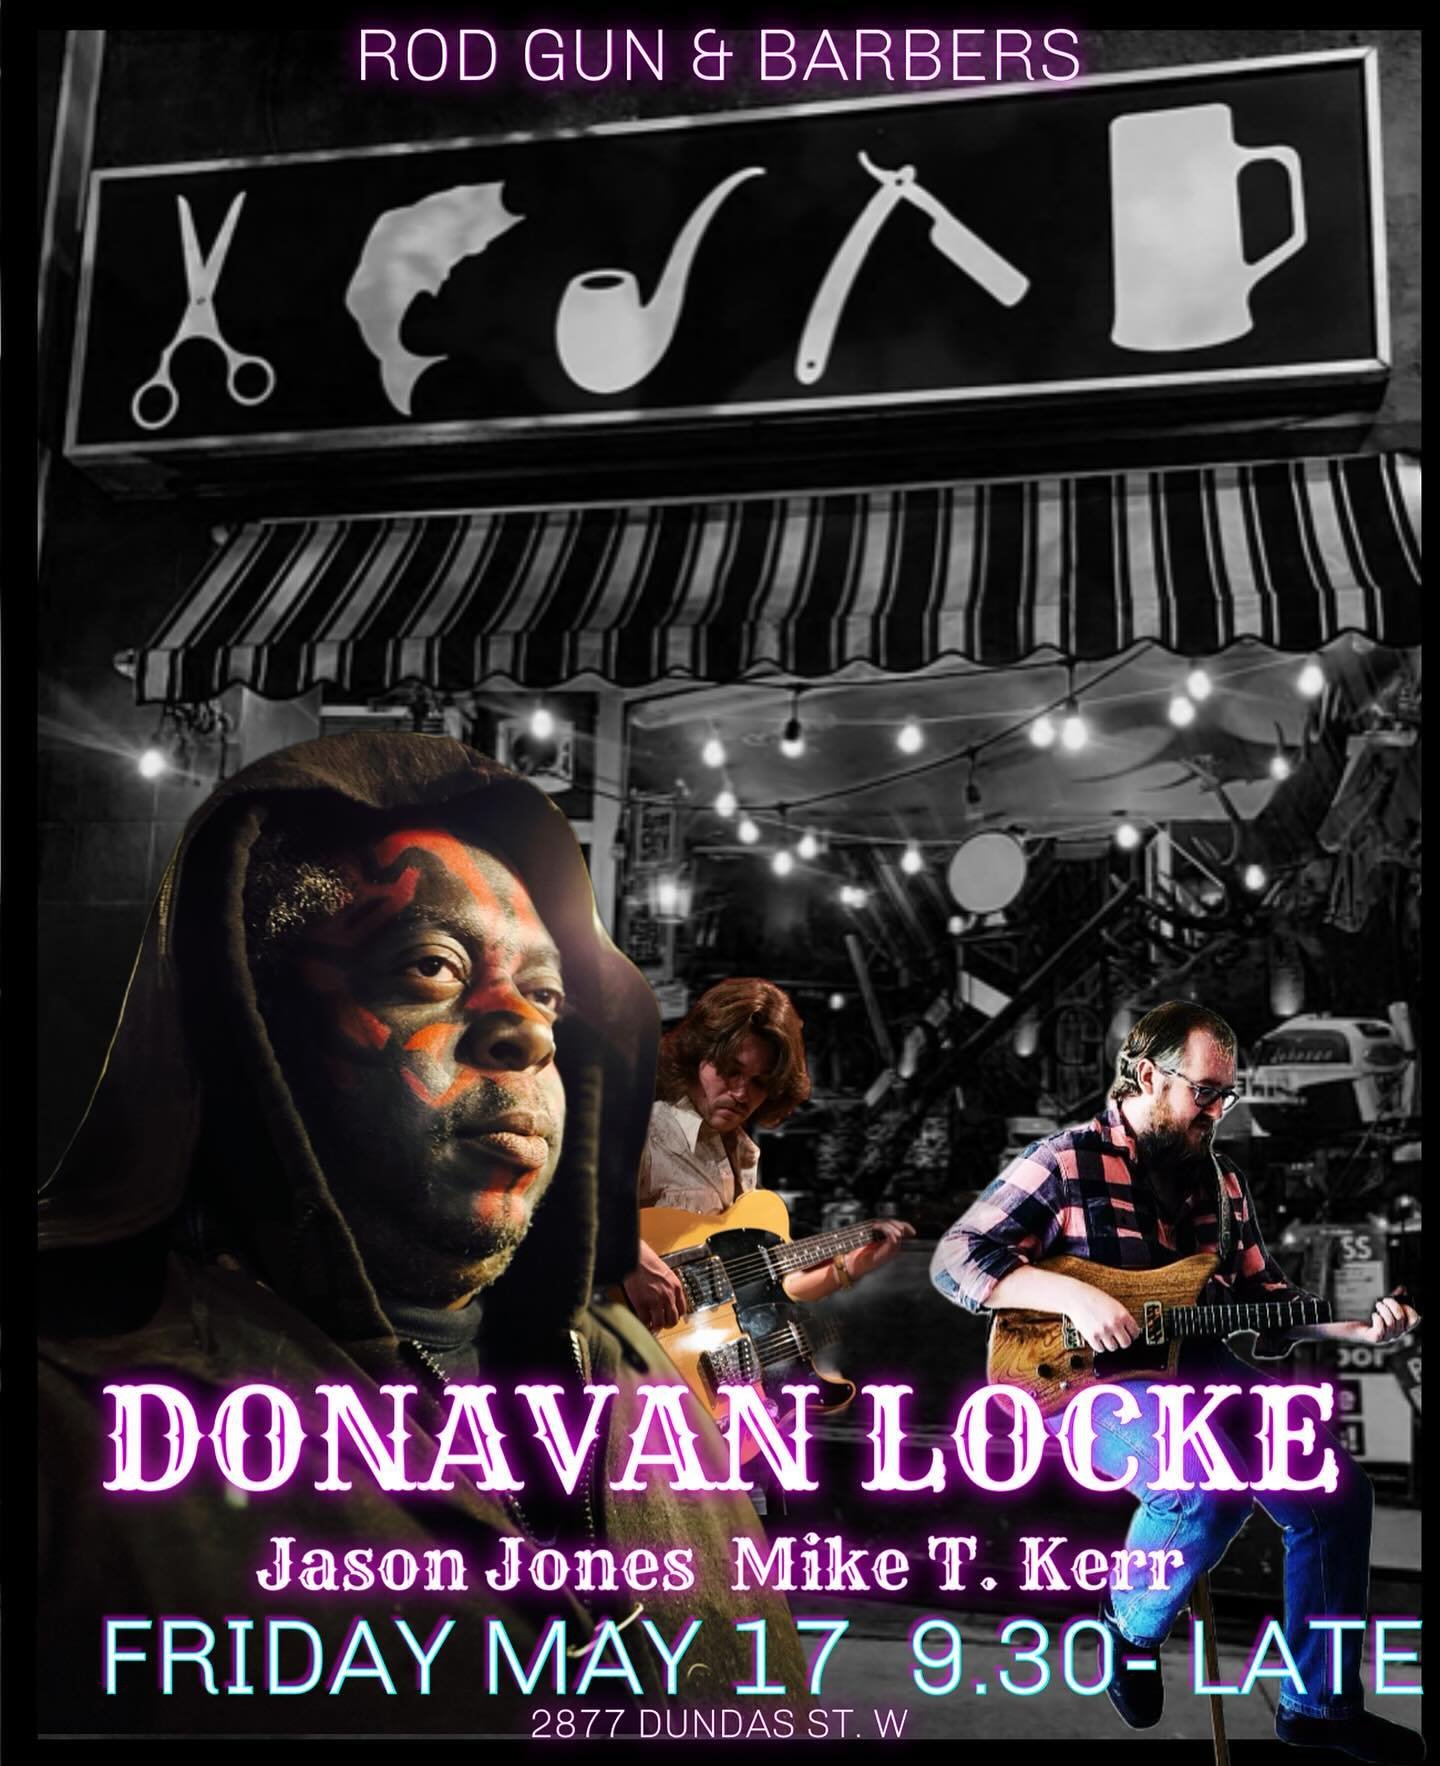 DONAVAN LOCKE IS BAAAAAACK!
With pals Jason Jones &amp; Mike T Kerr
John behind the bar slingin&rsquo; drinks.
9pm- late!
@yousaviper
mike